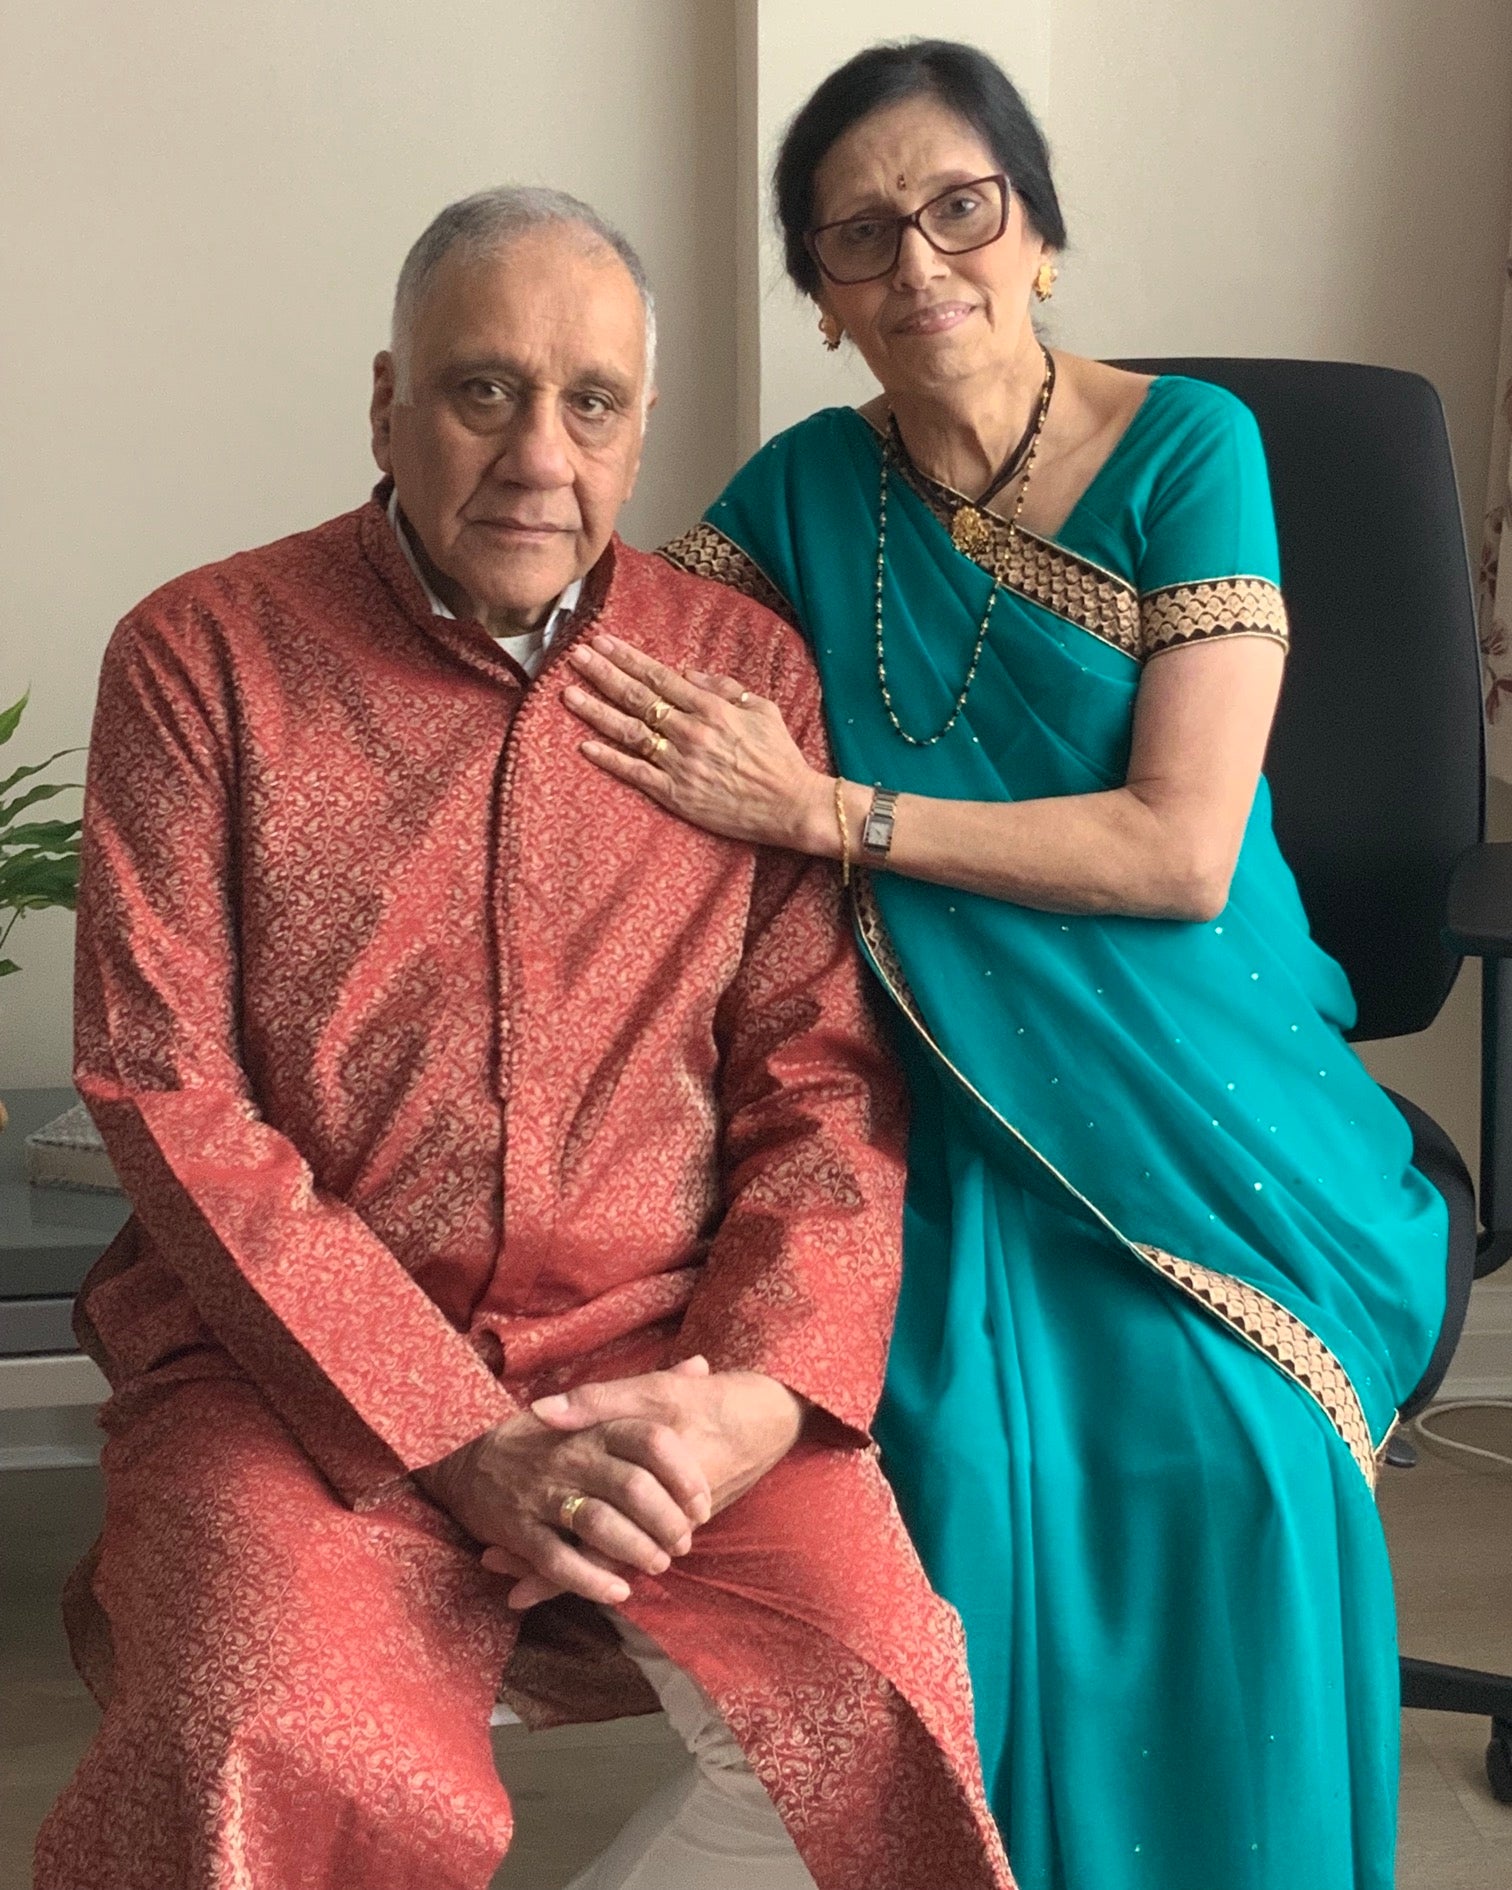 Chandra and Kasmira Naik in traditional dress